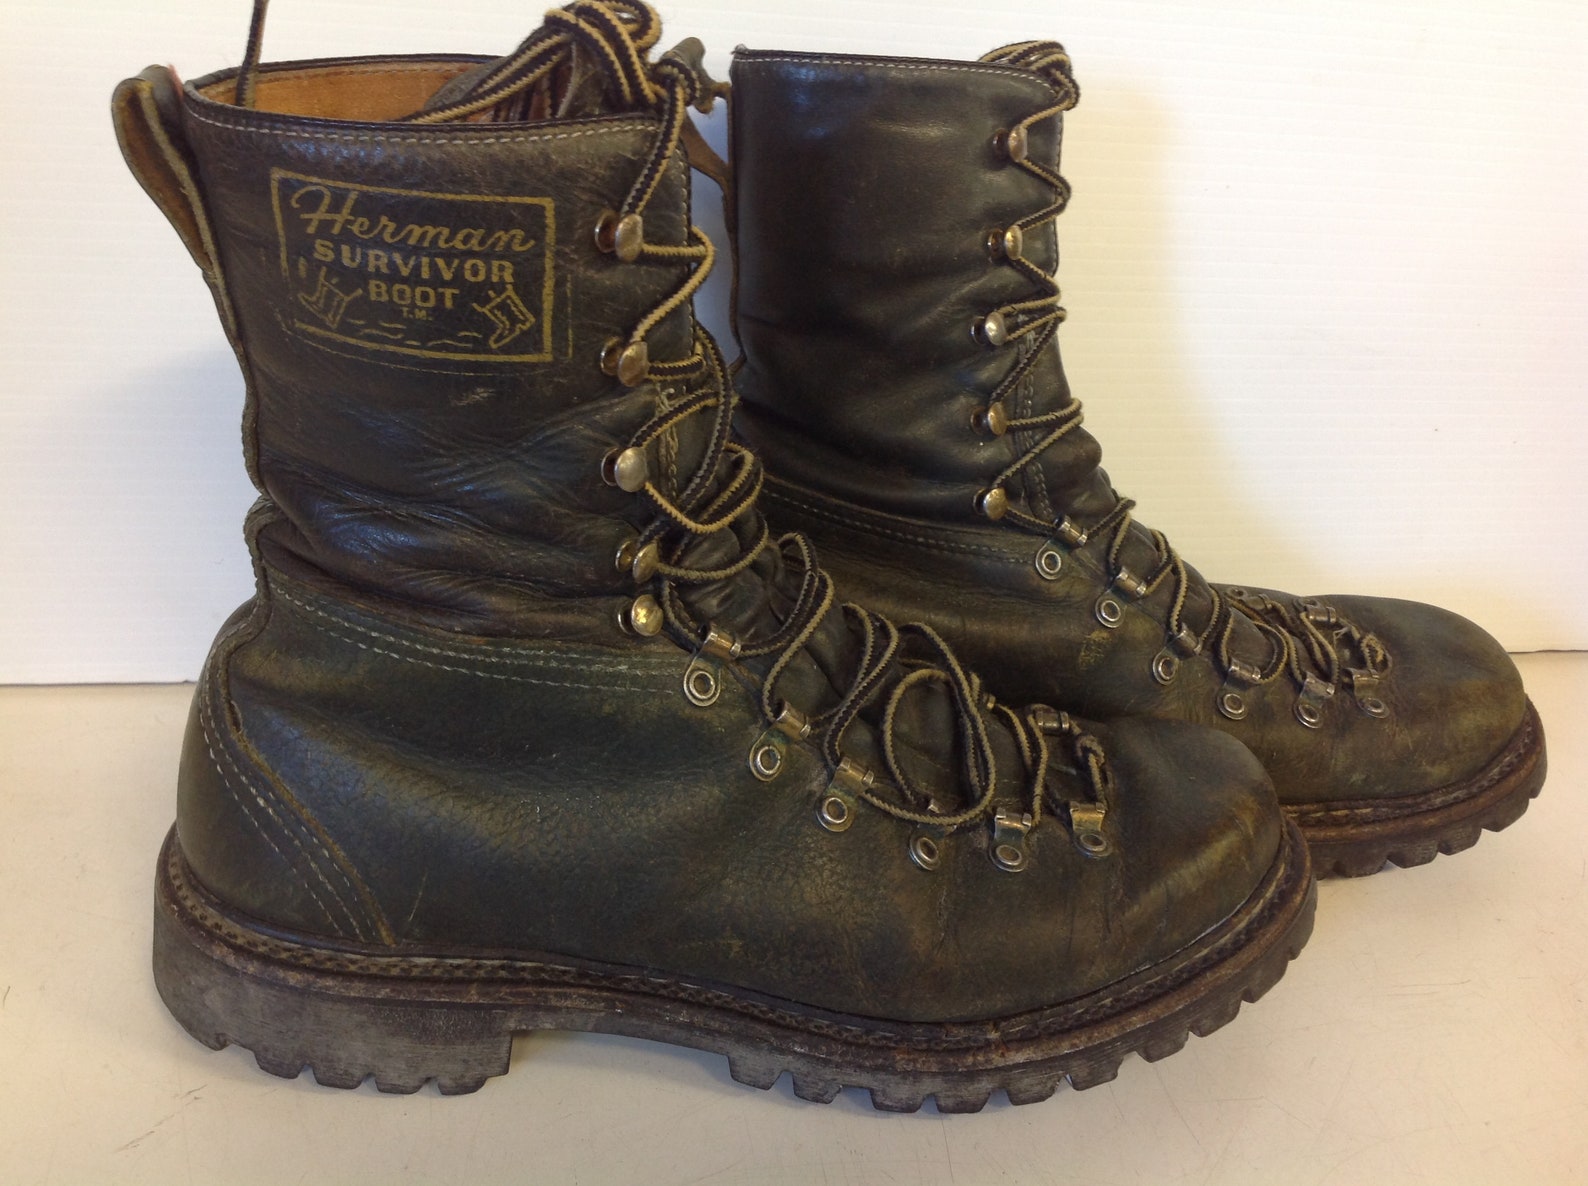 Vintage Green Leather Size 8 Herman Survivor Boots | Etsy